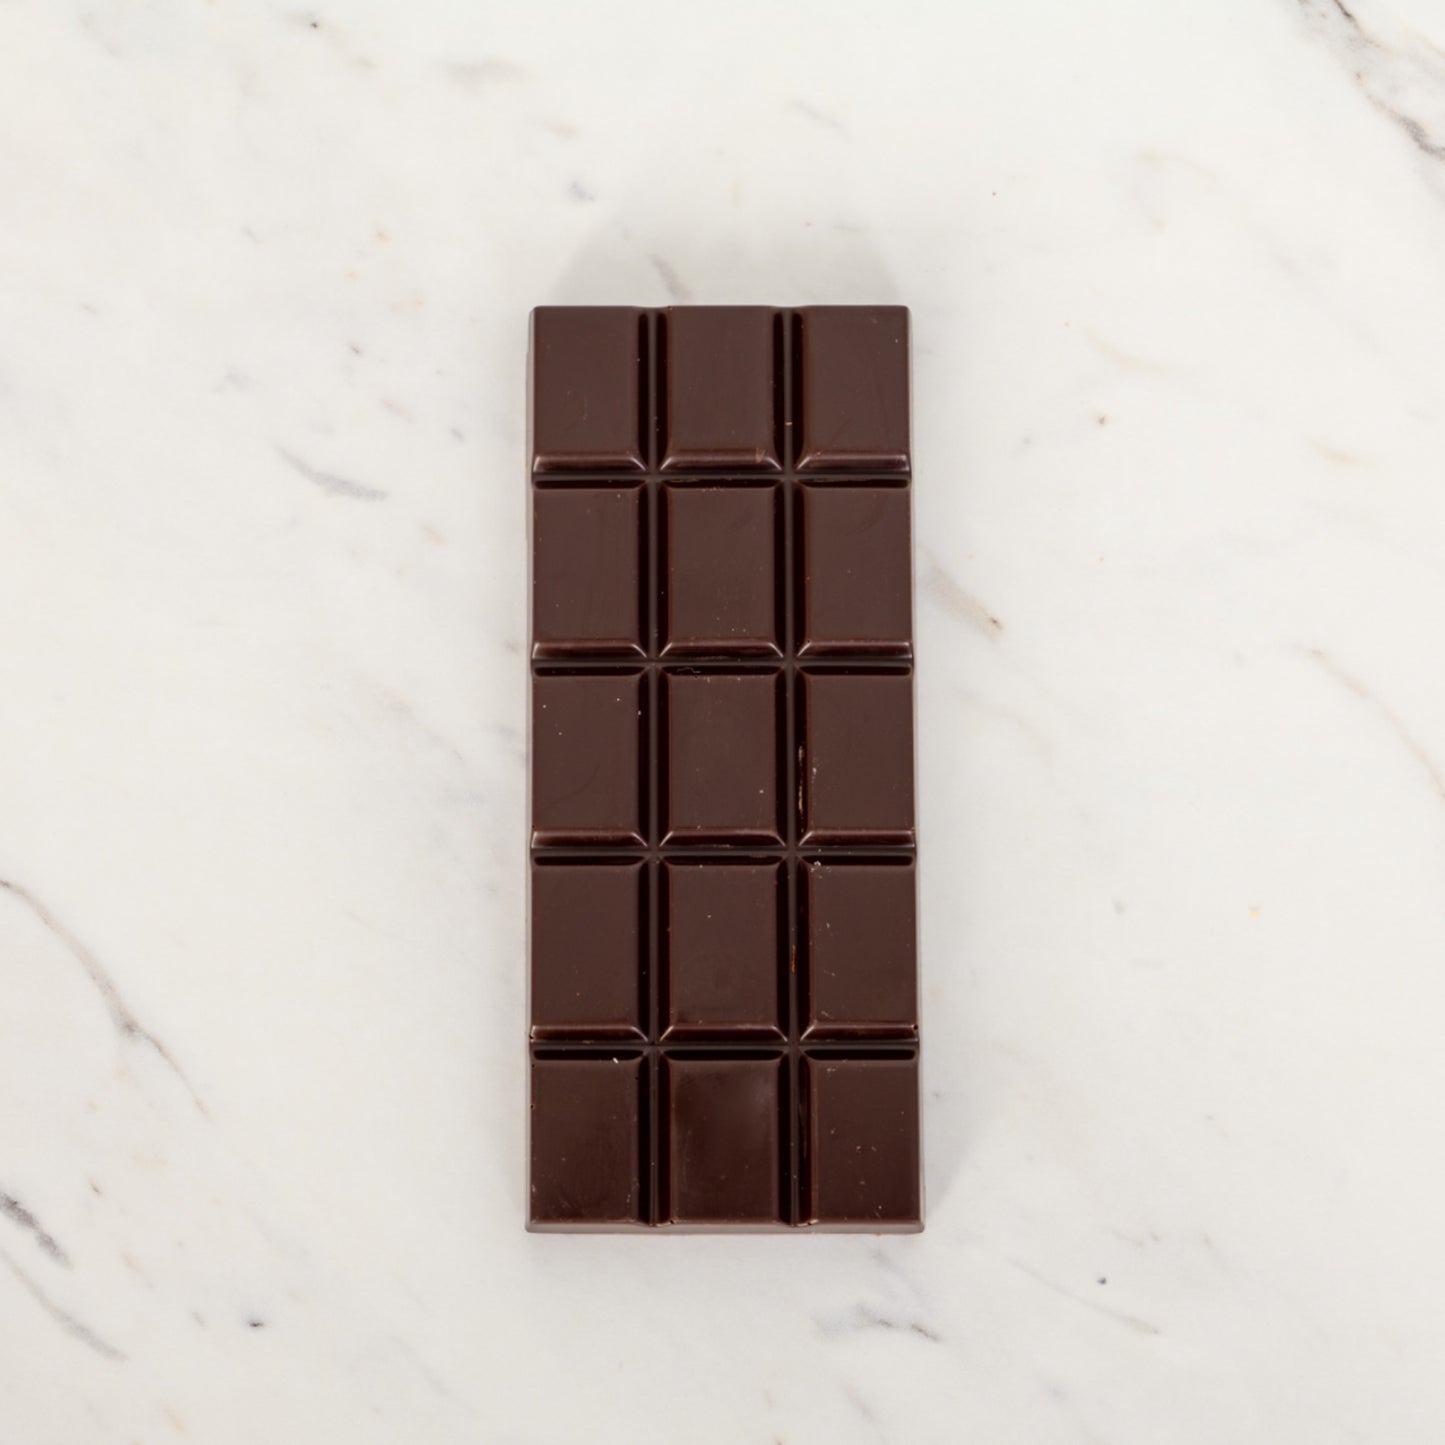 Single origin Ecuador 70% dark chocolate bar | Sam Joseph Chocolates | Luxury Chocolates Online